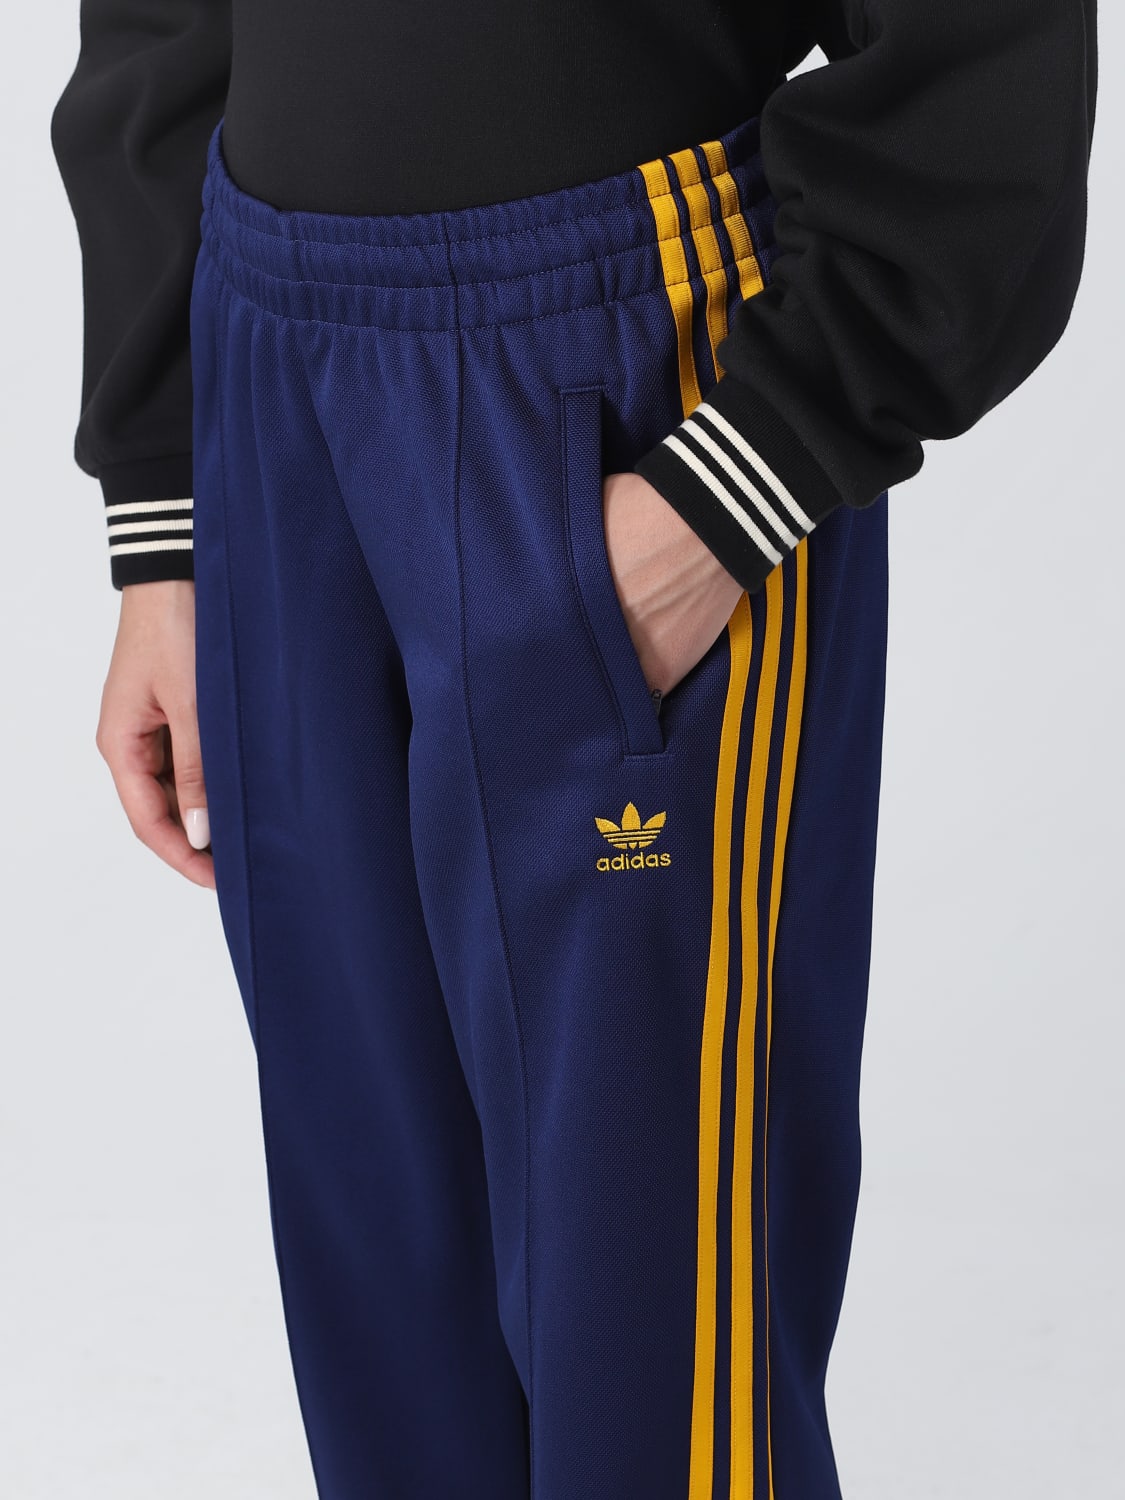 møde Egnet Ti år ADIDAS ORIGINALS: pants for woman - Blue | Adidas Originals pants IK0425  online at GIGLIO.COM